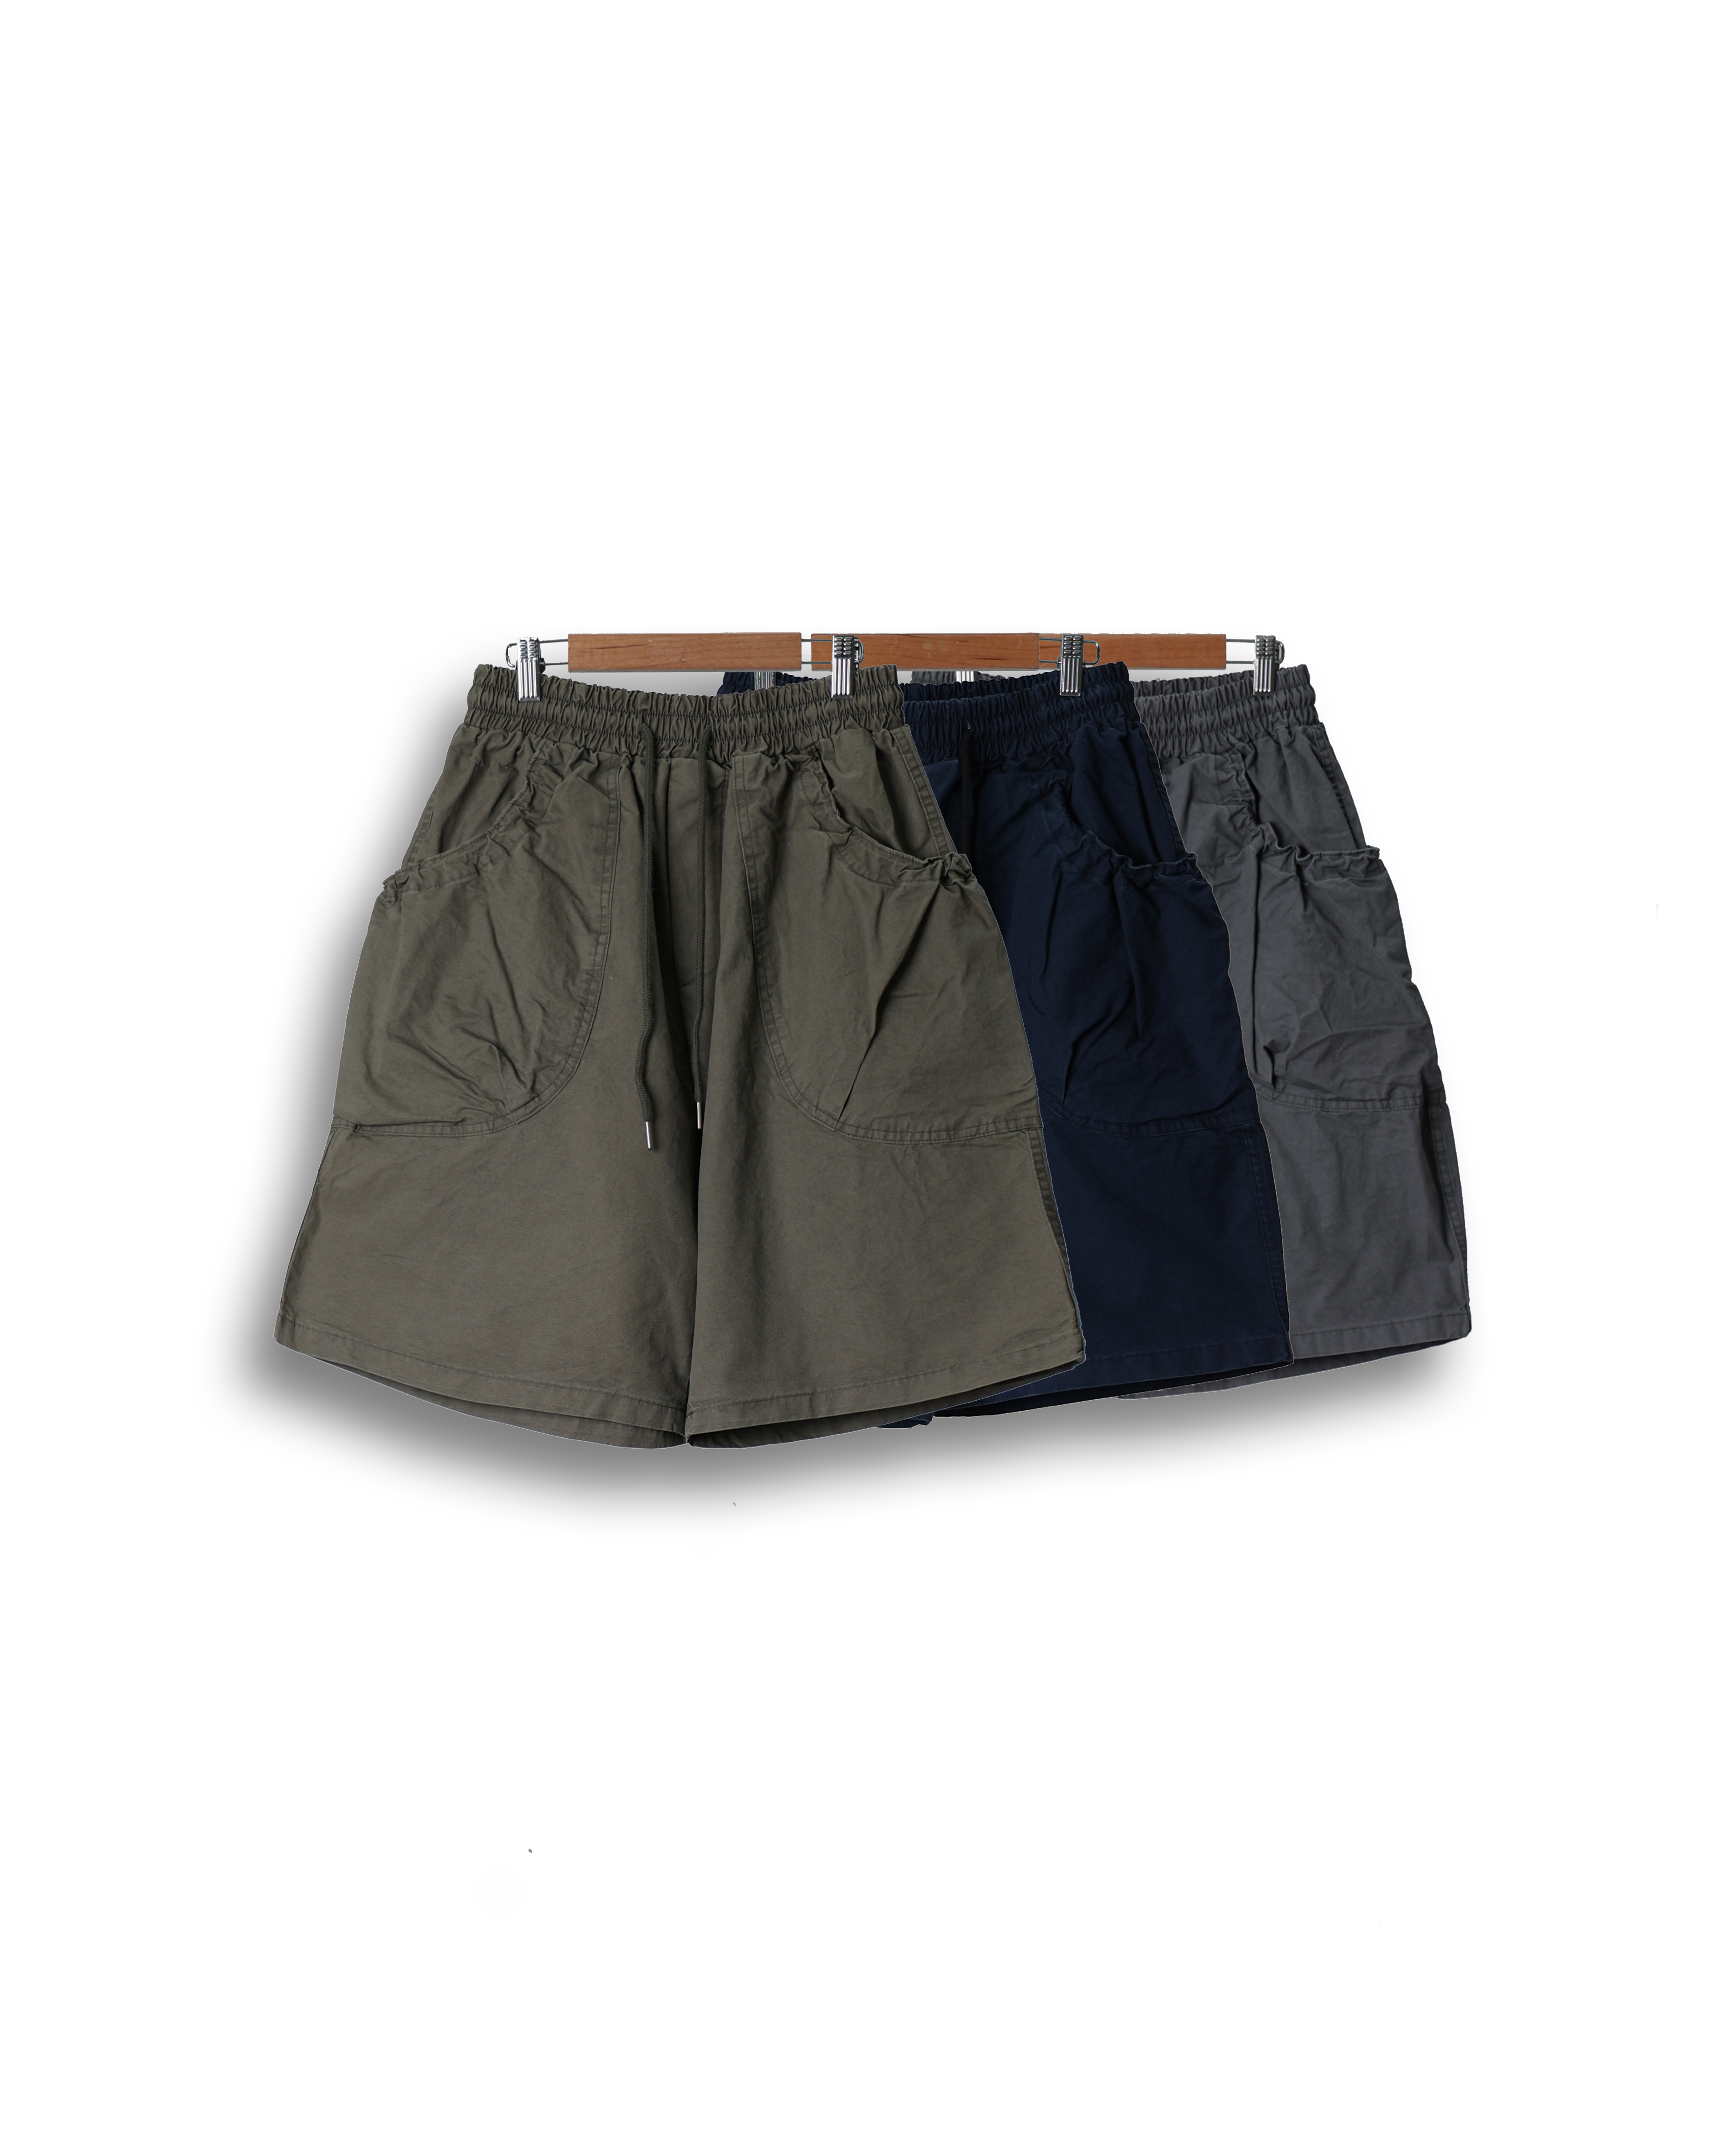 RAM ATTOM Banded Pocket Half Pants (Charcoal/Navy/Olive)